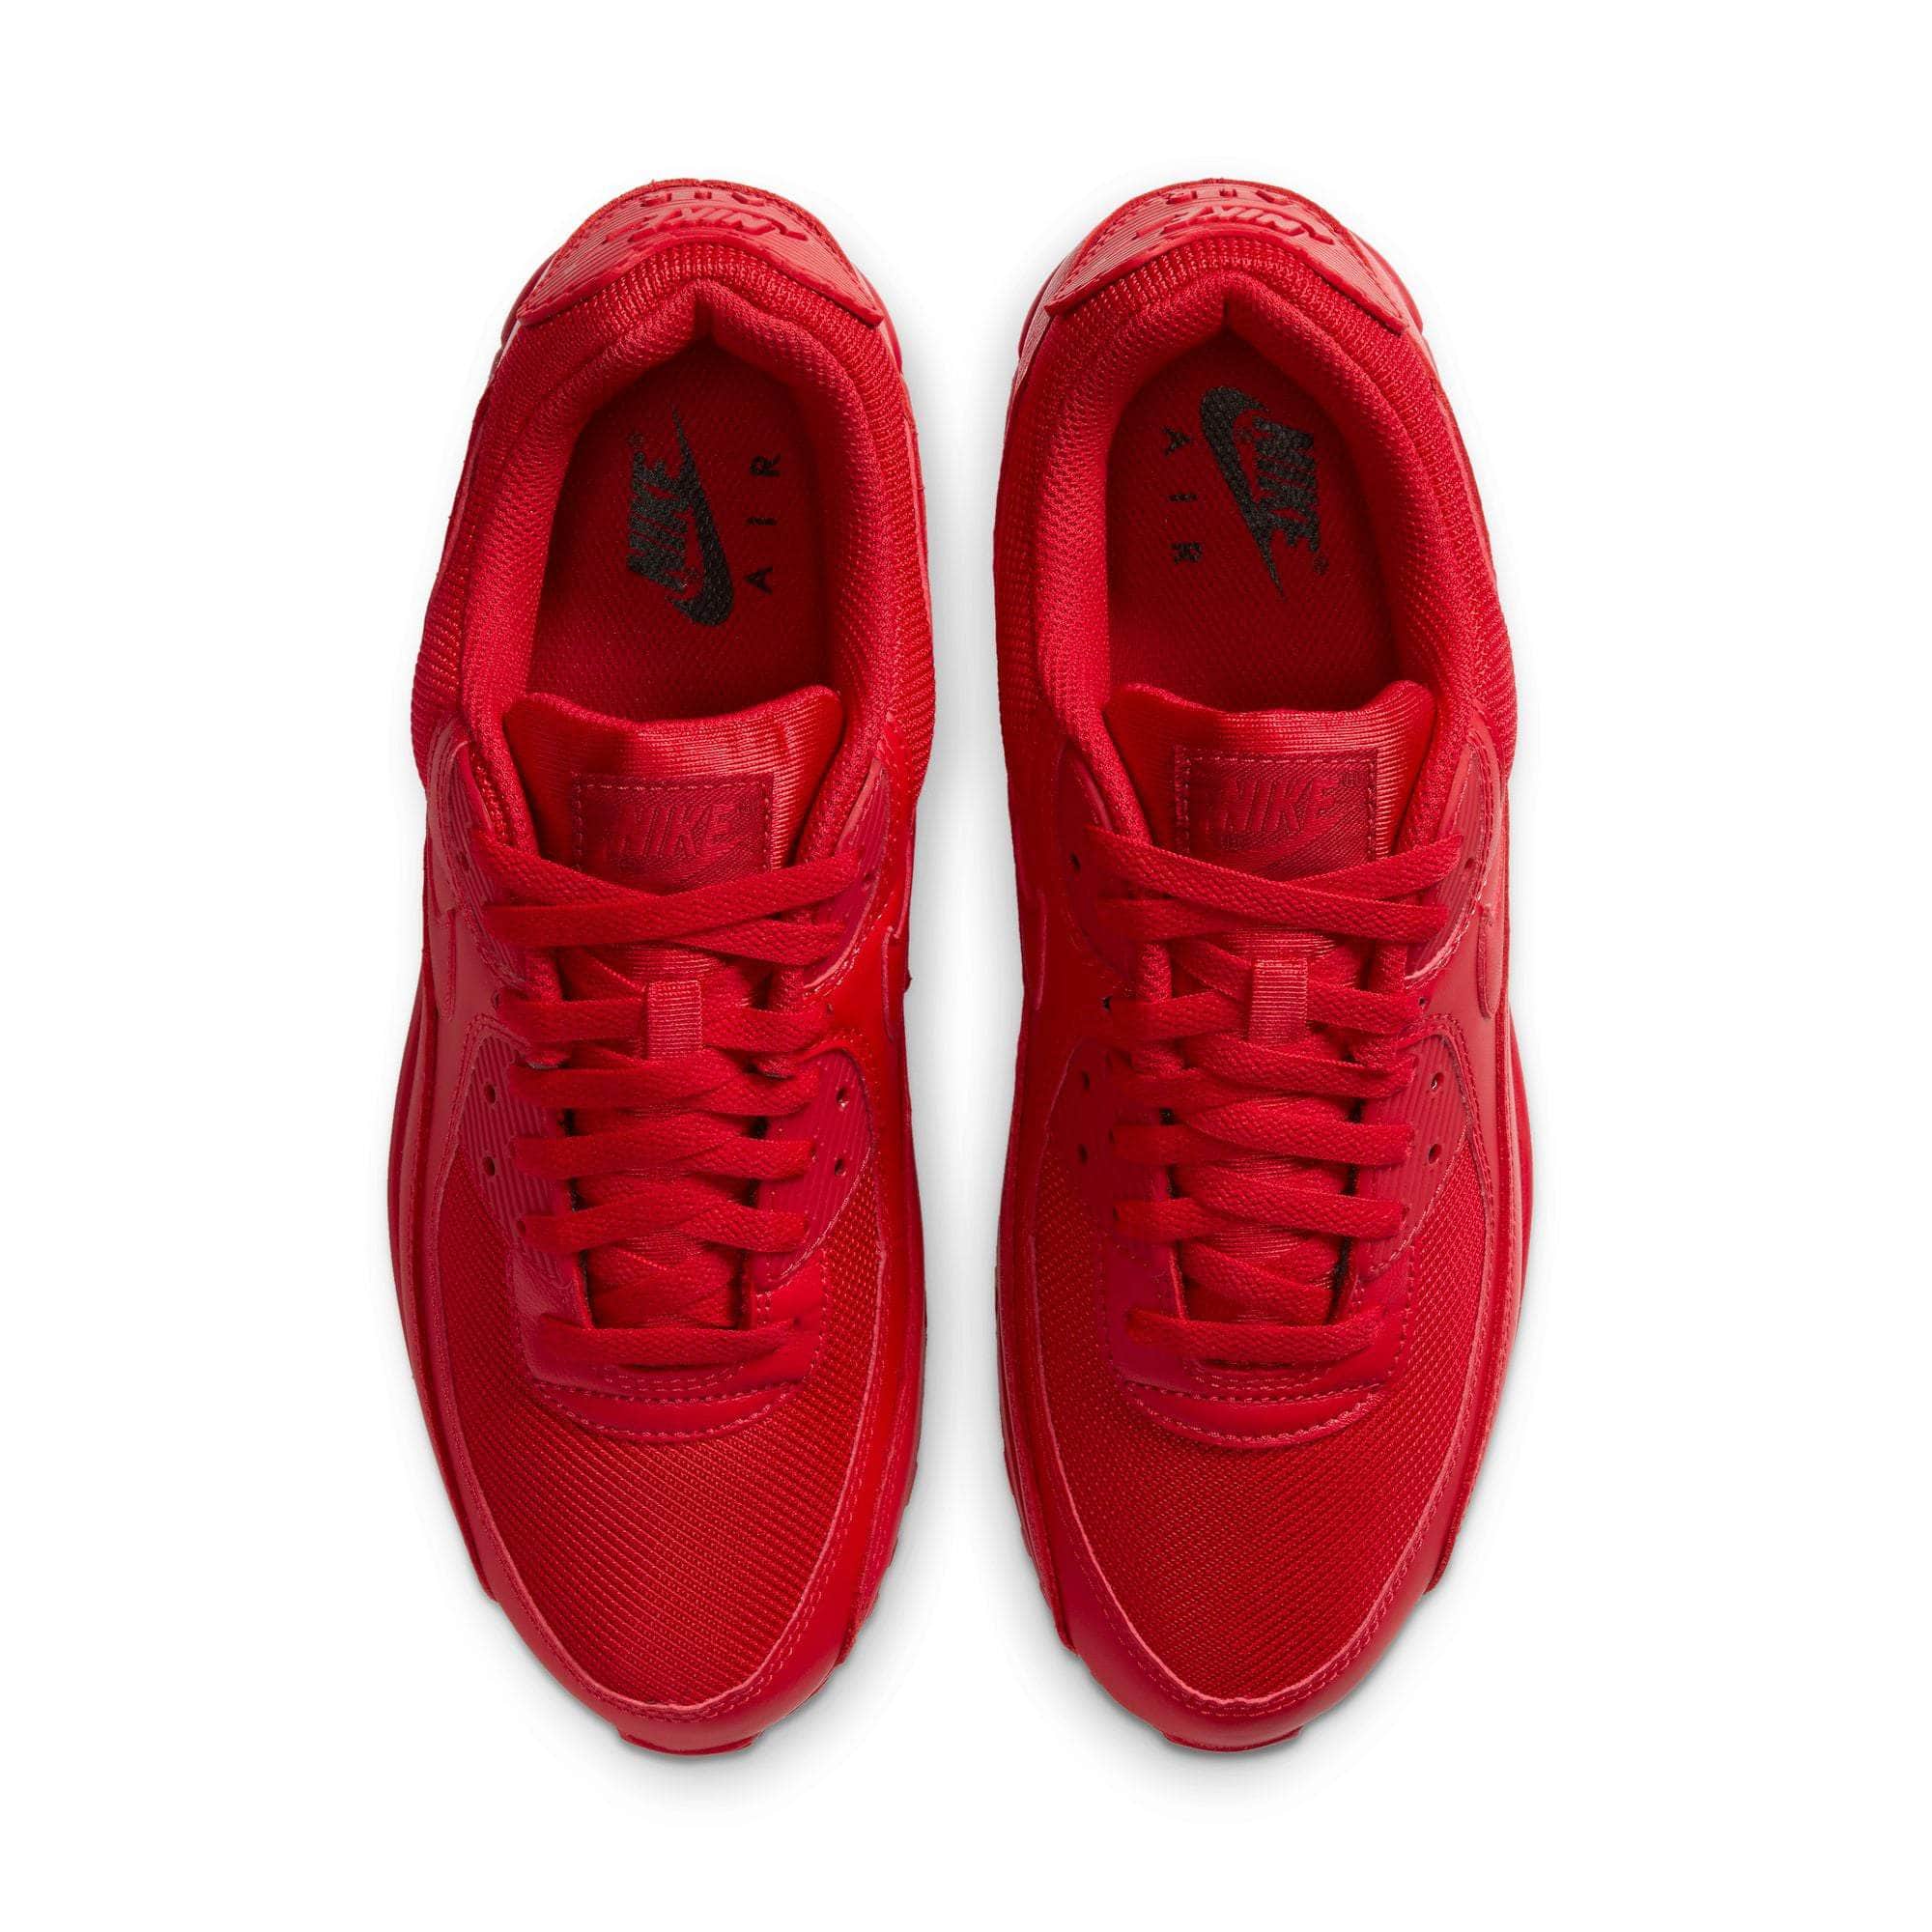 NIKE FOOTWEAR Nike Air Max 90 "Triple Red" - Men's